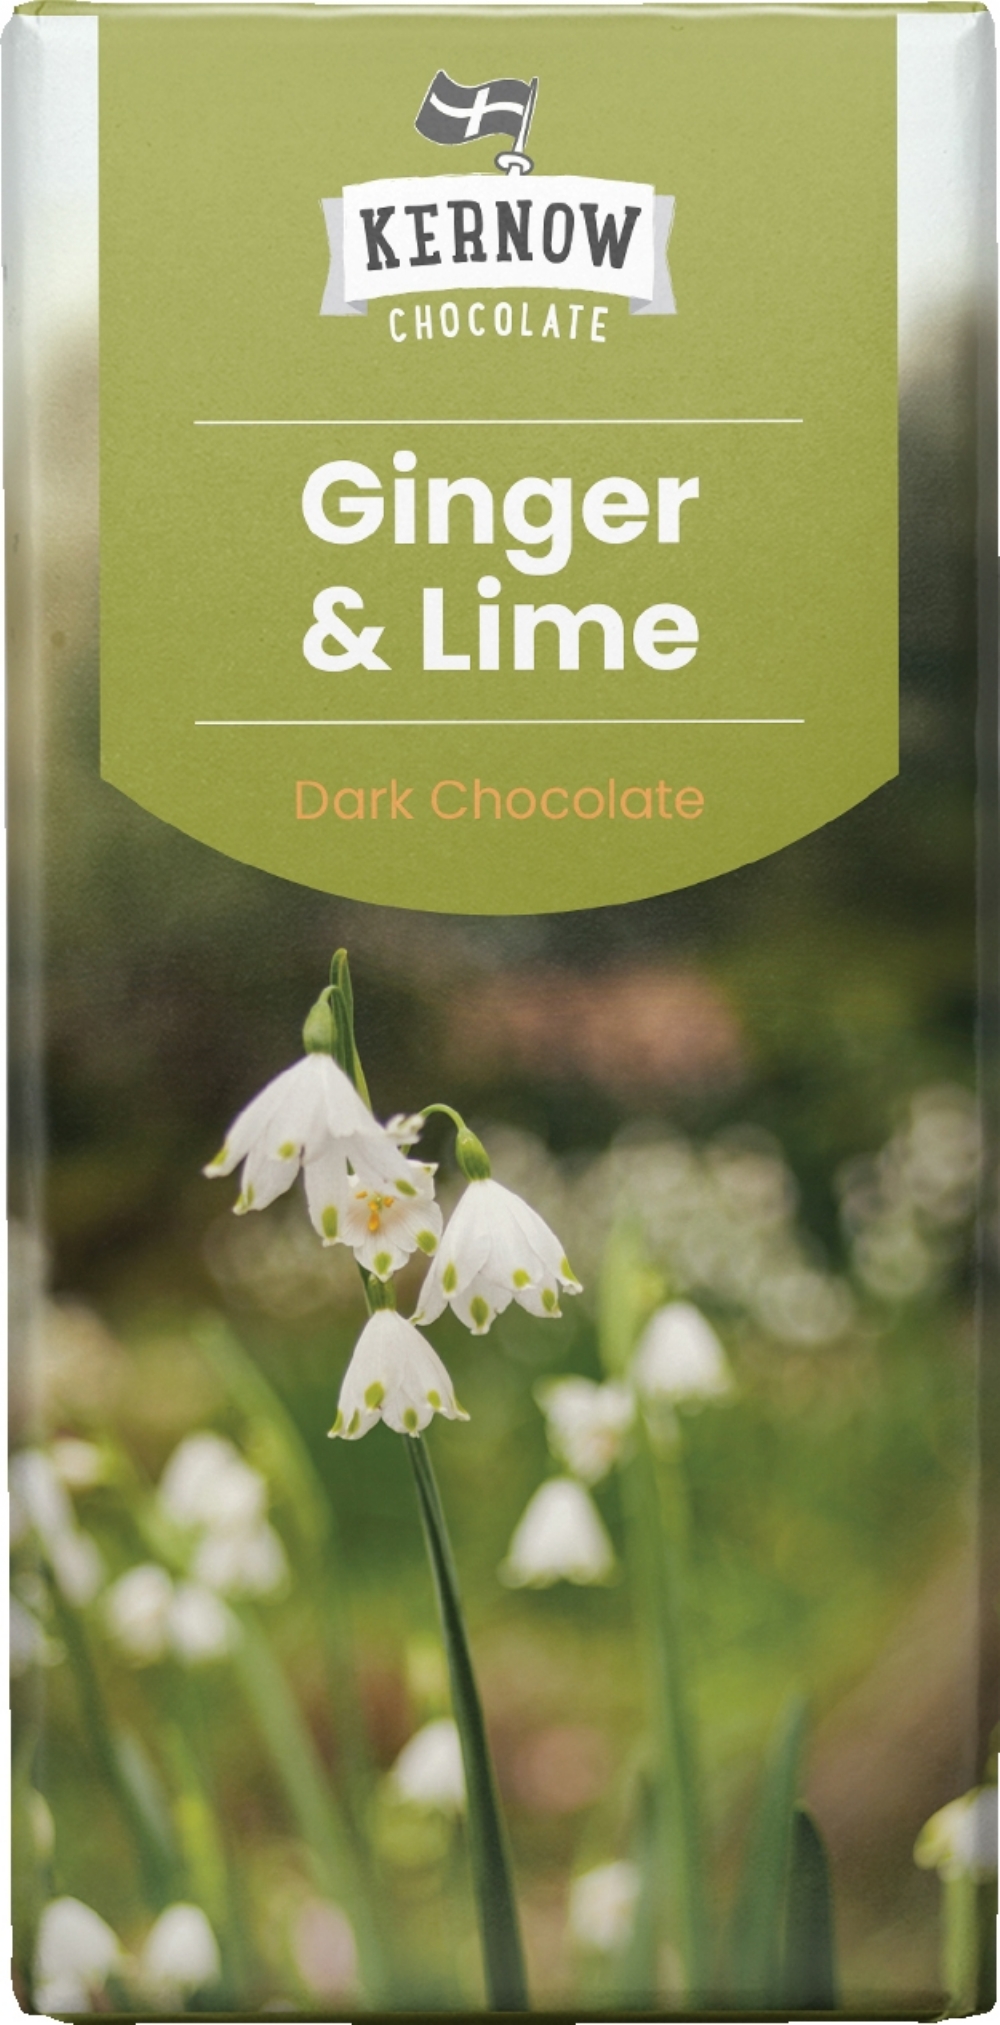 KERNOW Ginger & Lime Dark Chocolate Bar 100g